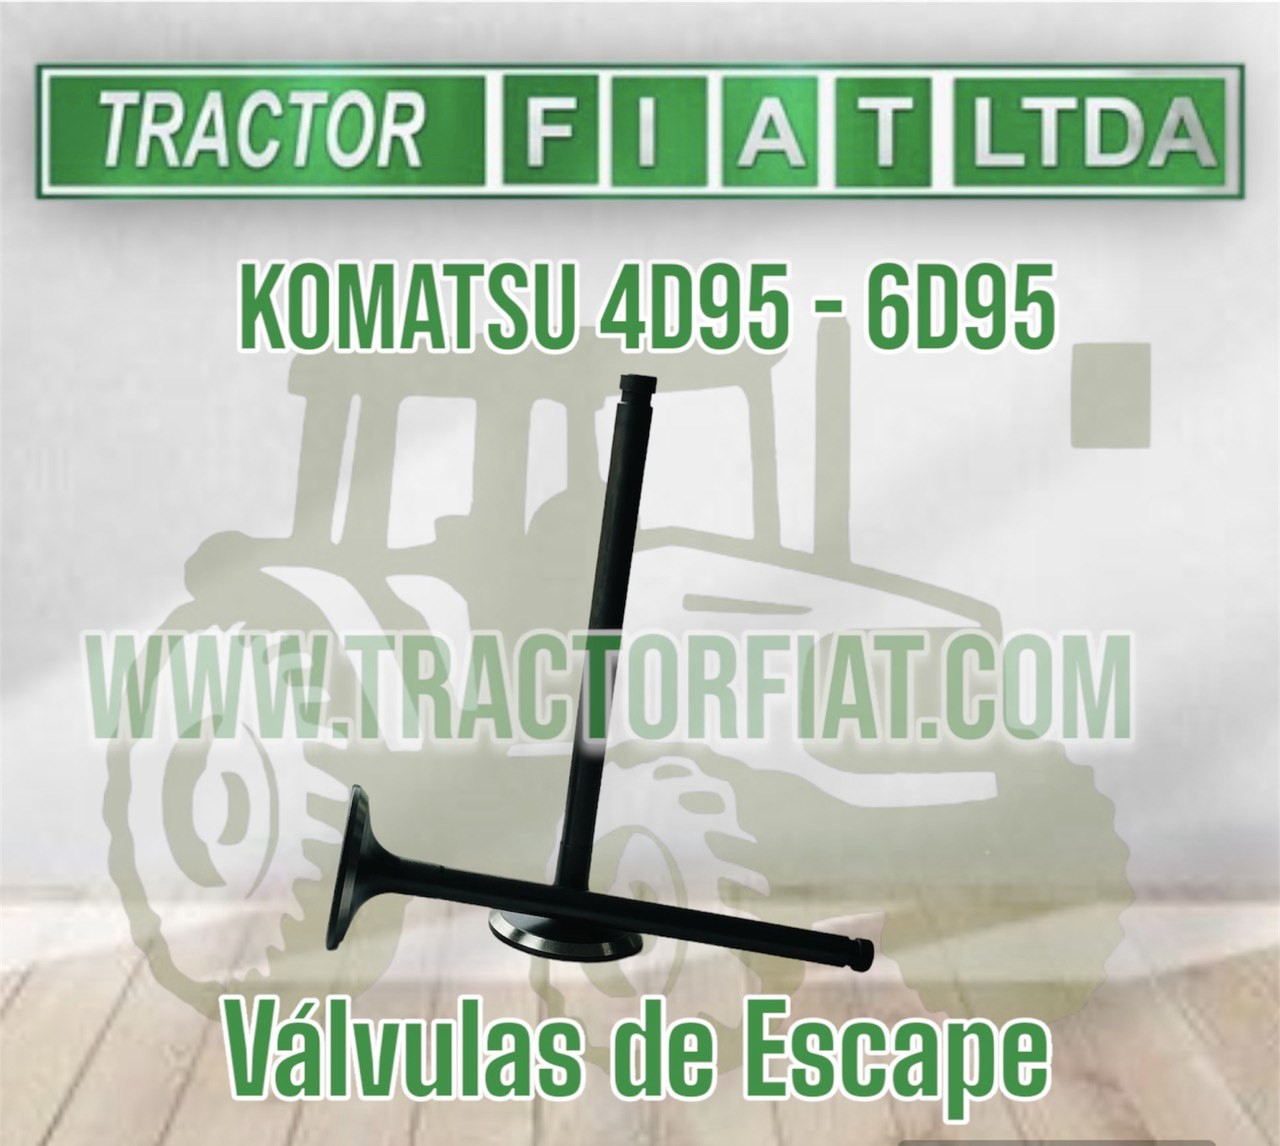 VALVULAS DE ESCAPE - MOTOR KOMATSU 6D95/4D95